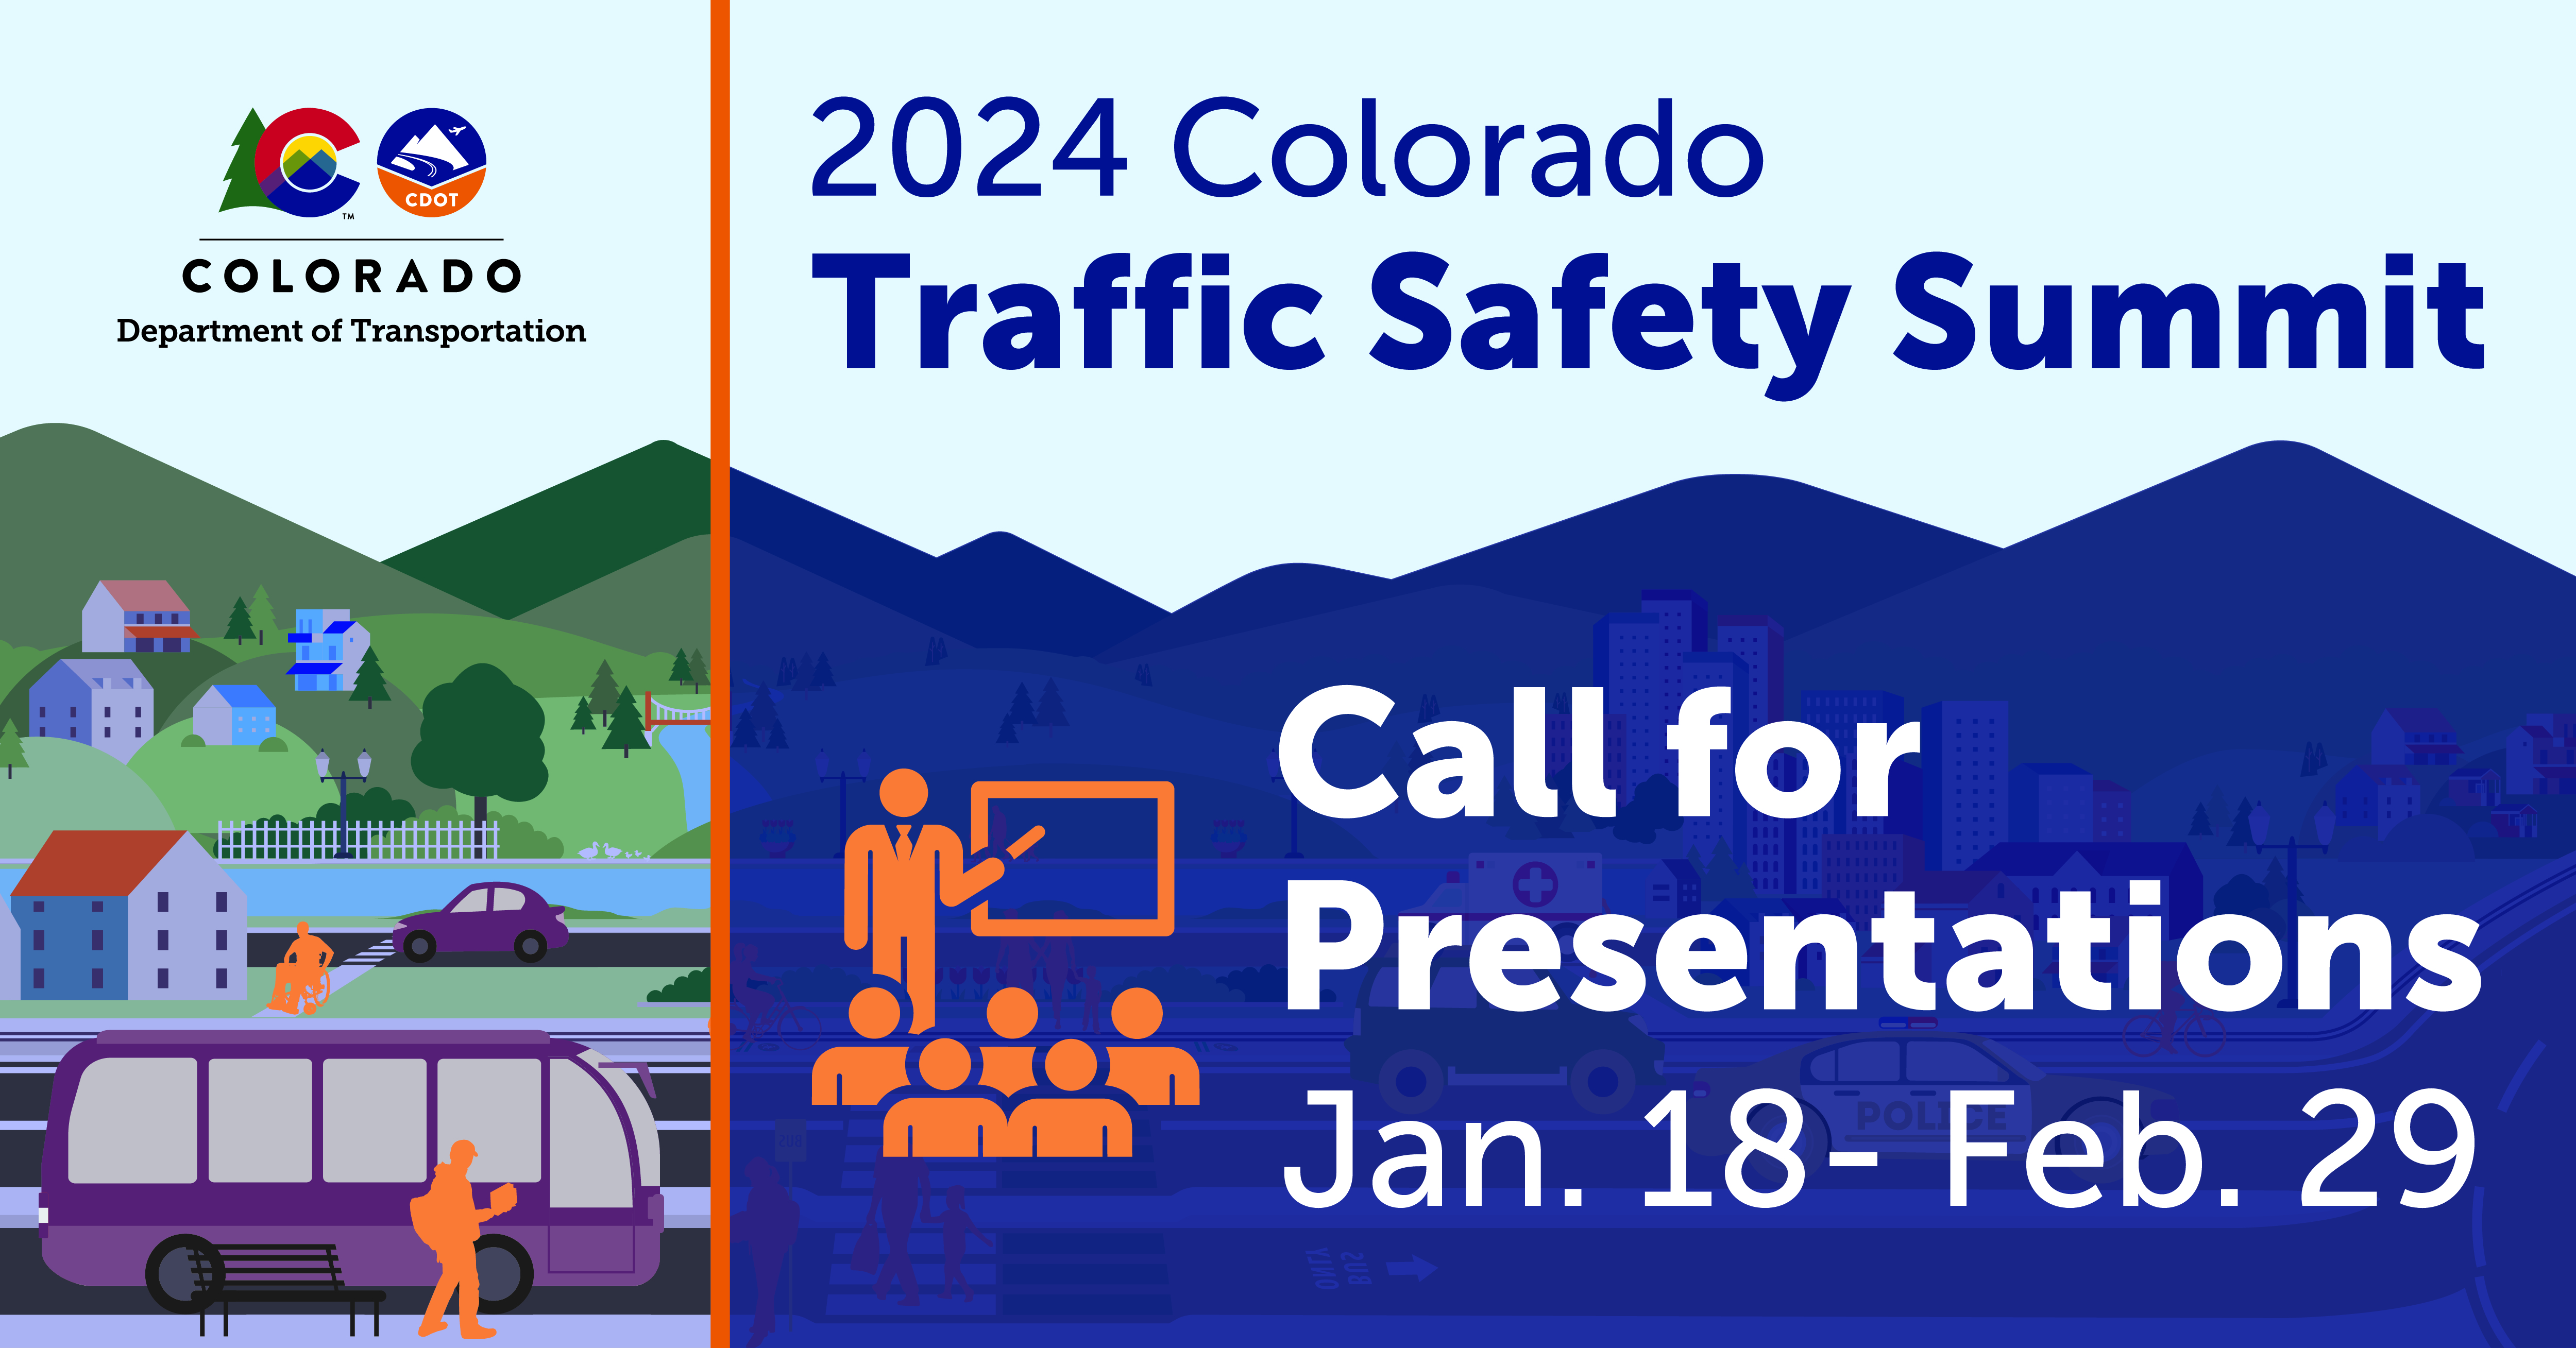 2024 Colorado Traffic Safety Summit.jpg detail image